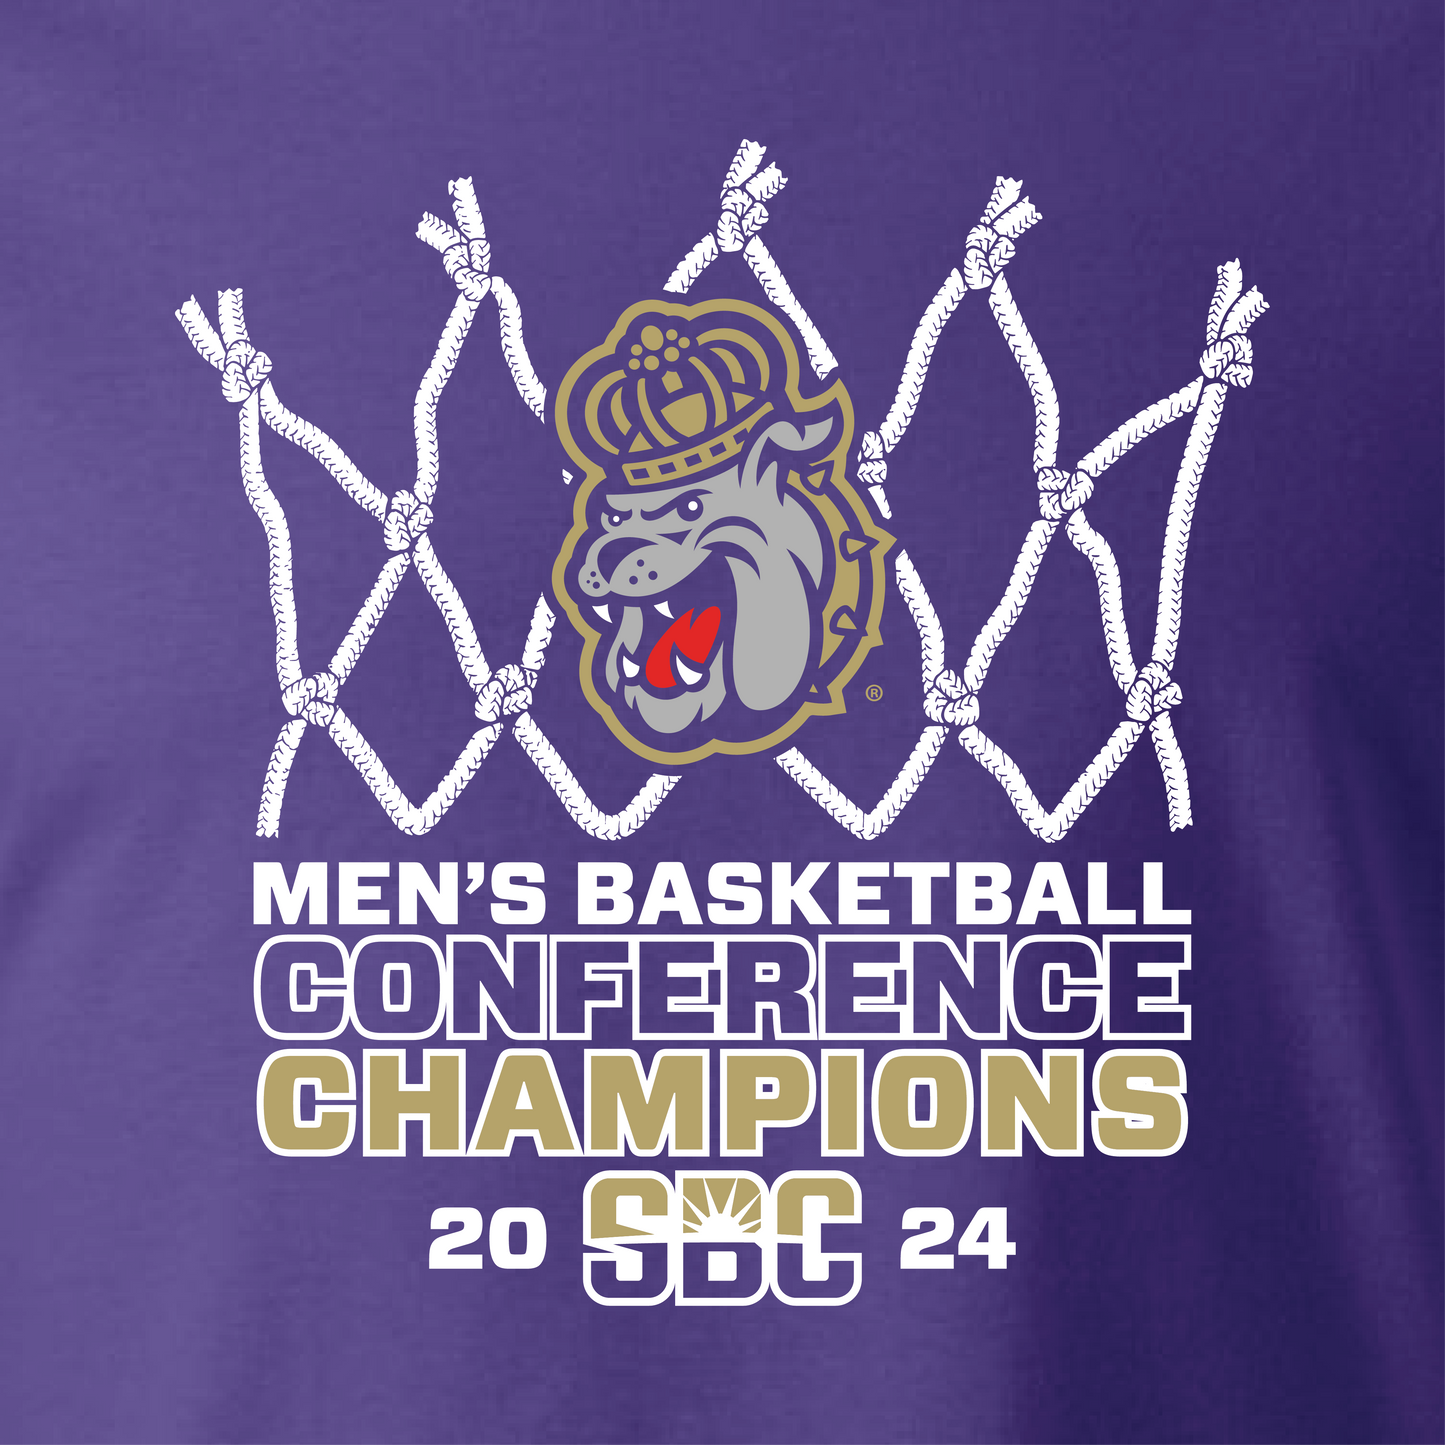 JMU Men's Basketball SBC Champions Hooded Sweatshirt